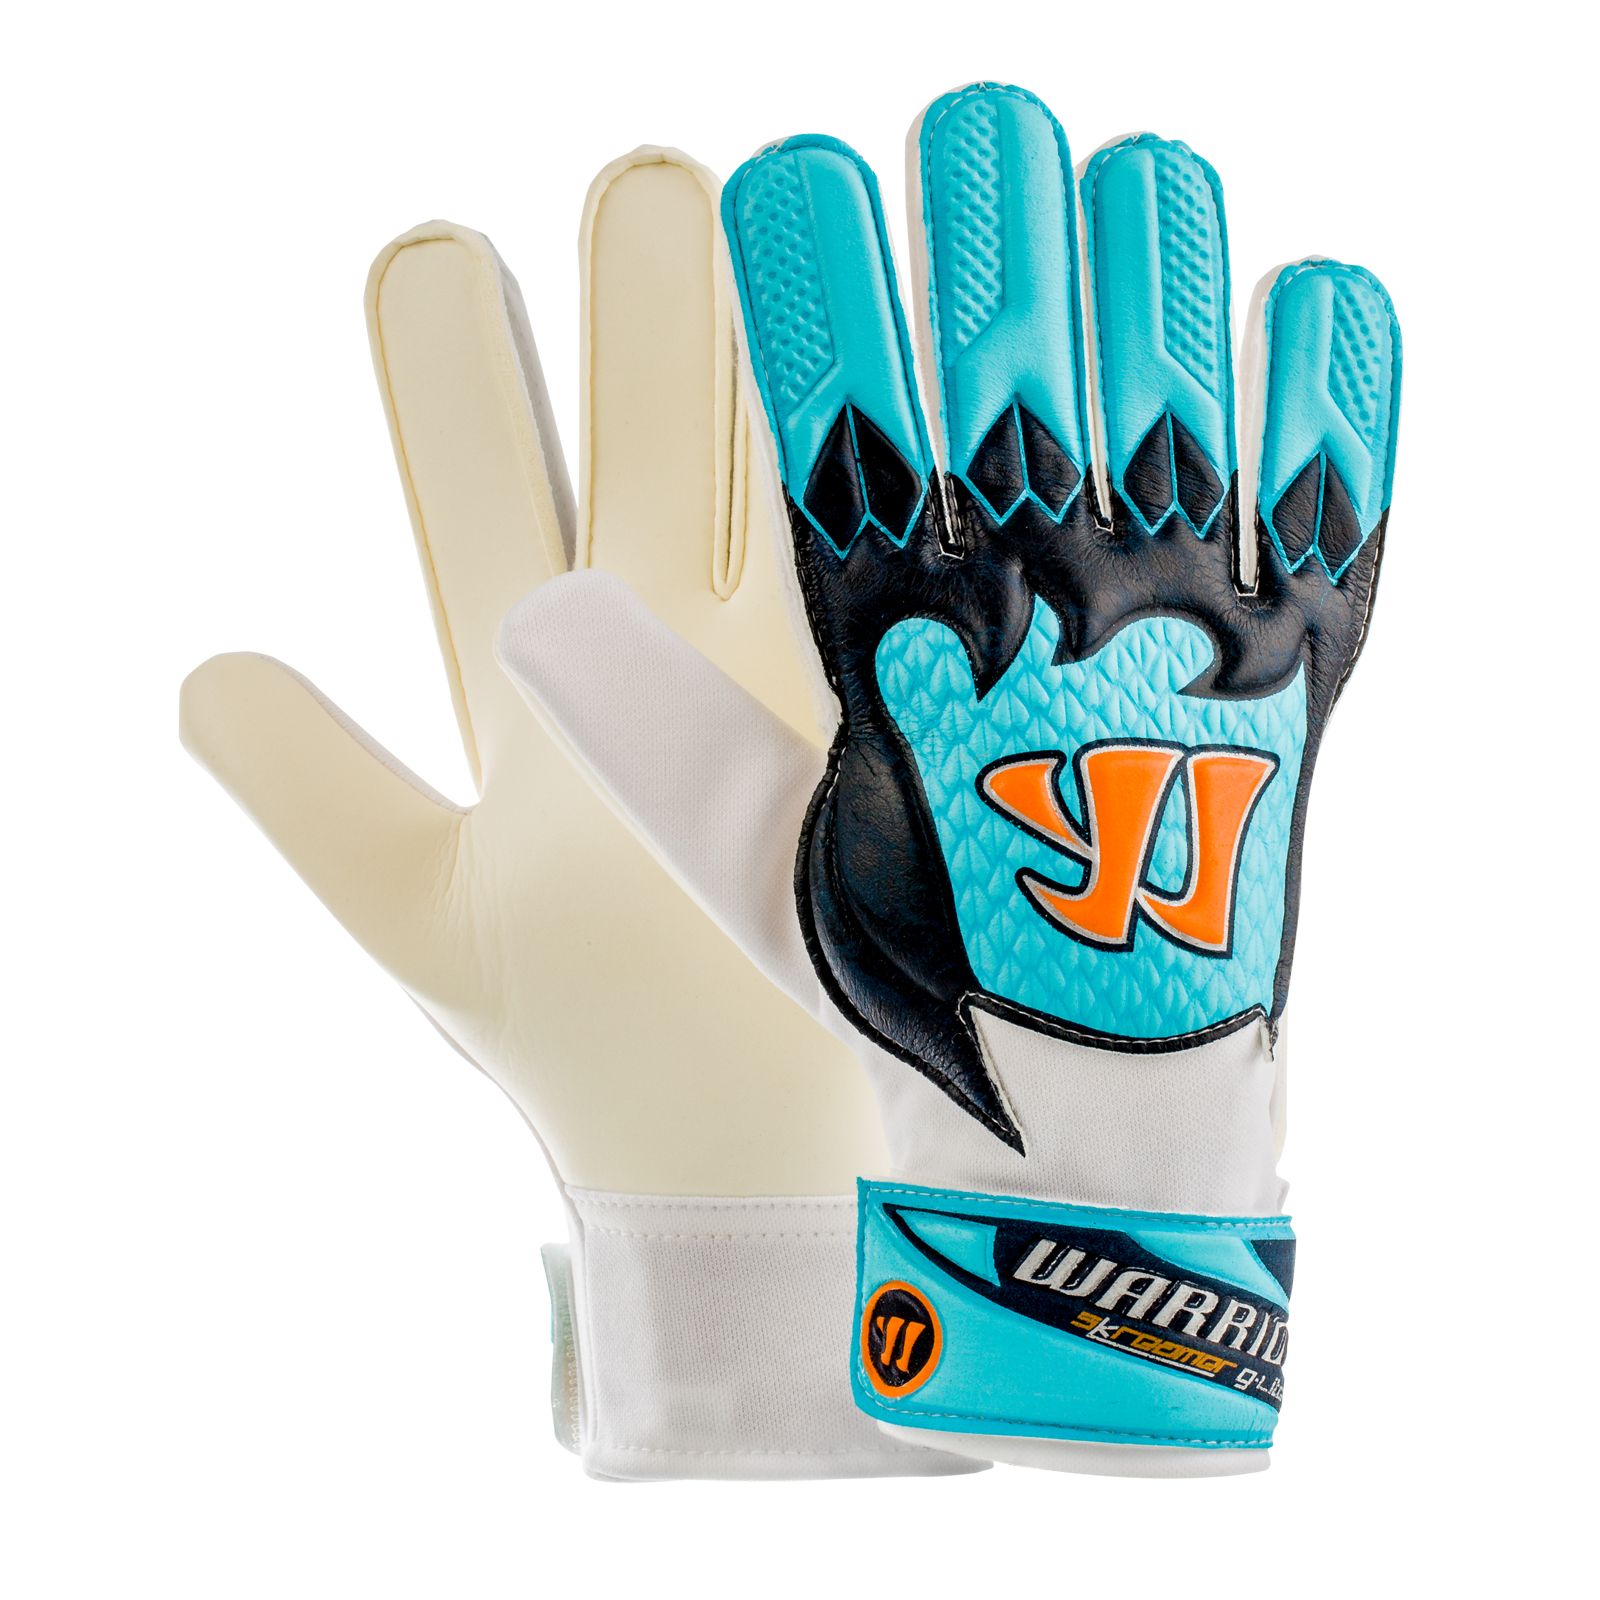 Skreamer G-Lite Junior Goalkeeper Gloves, White with Blue Radiance & Insignia Blue image number 0